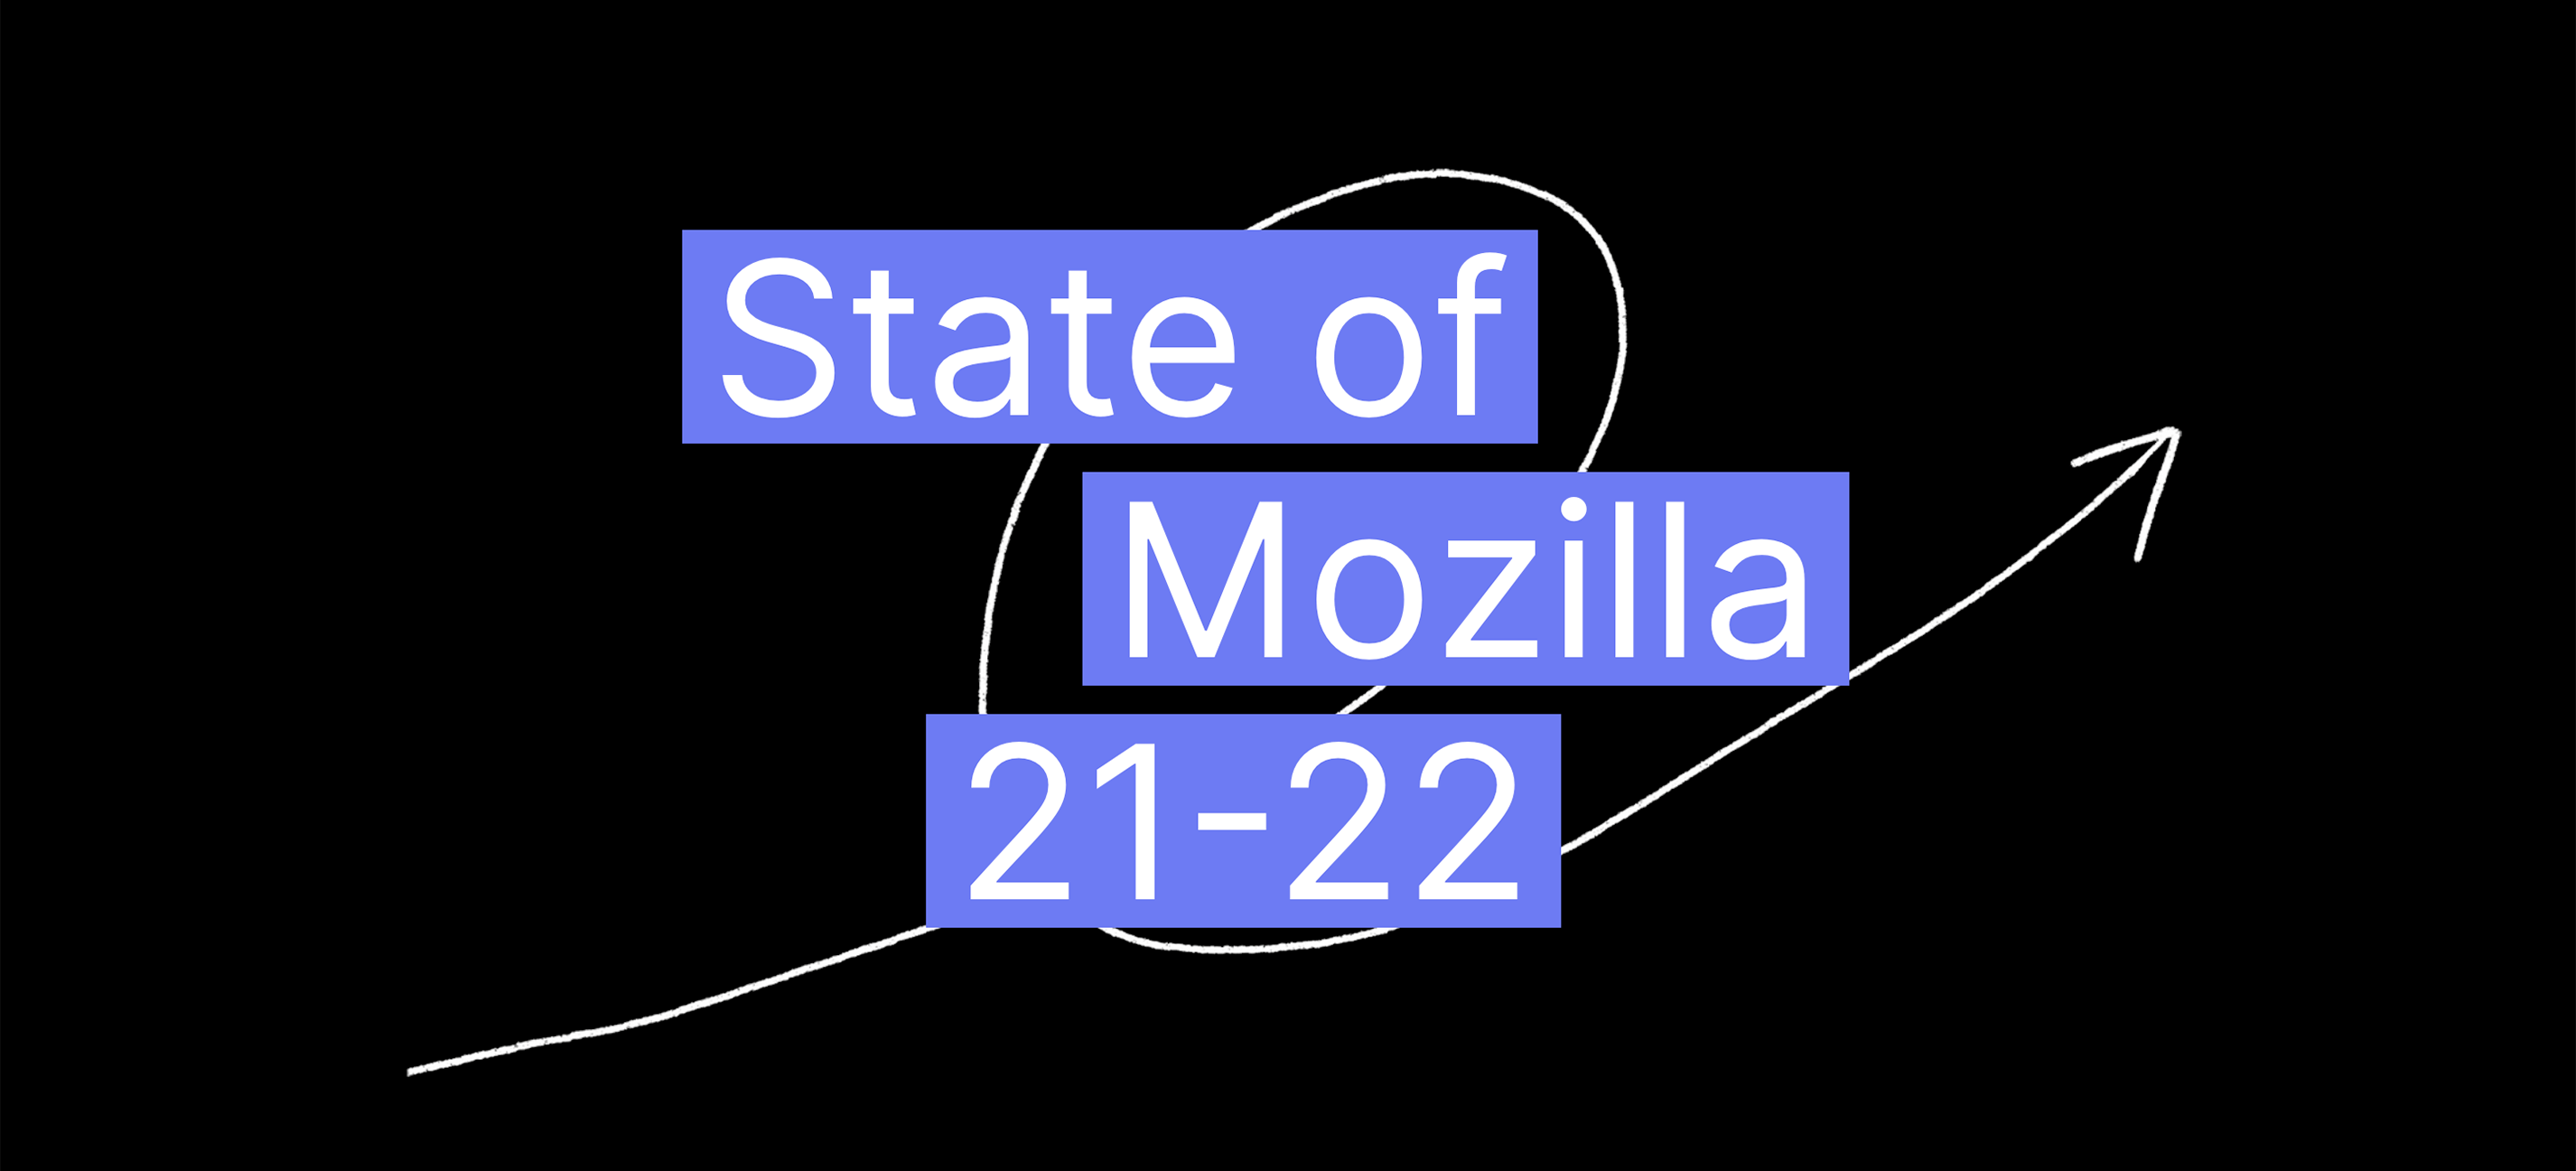 www.mozilla.org image